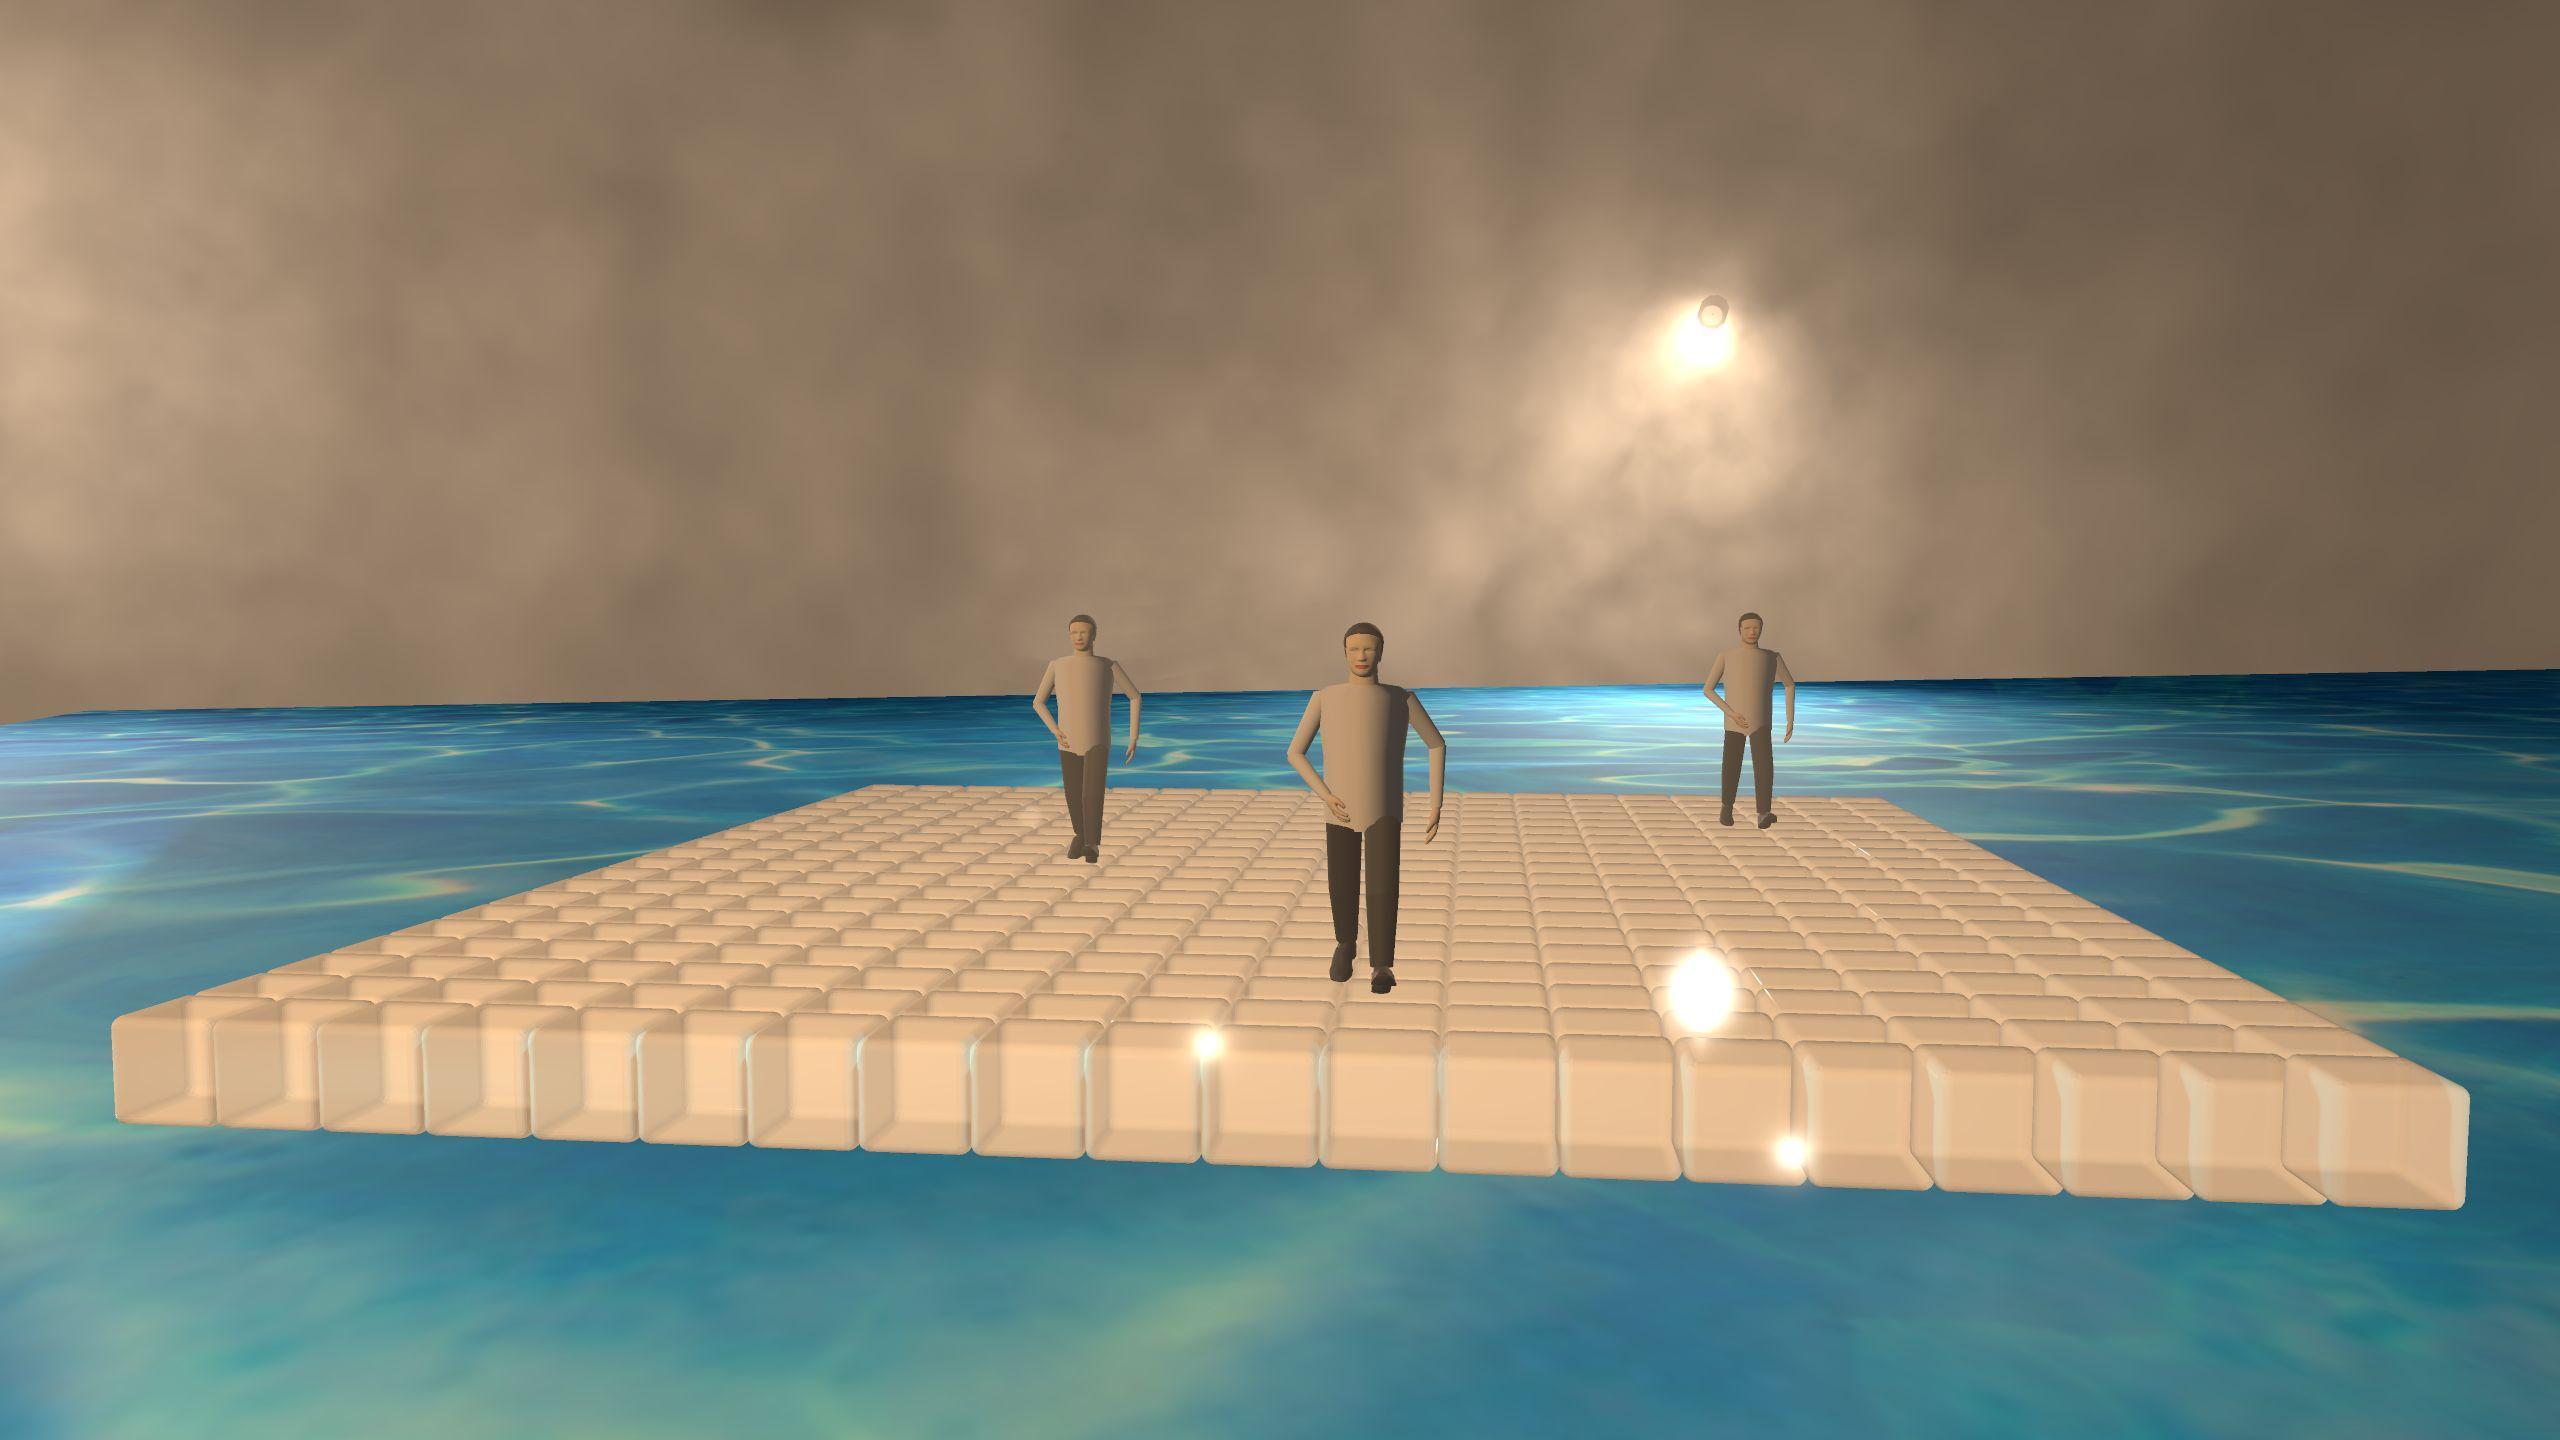 Ponton - plutajuća platforma